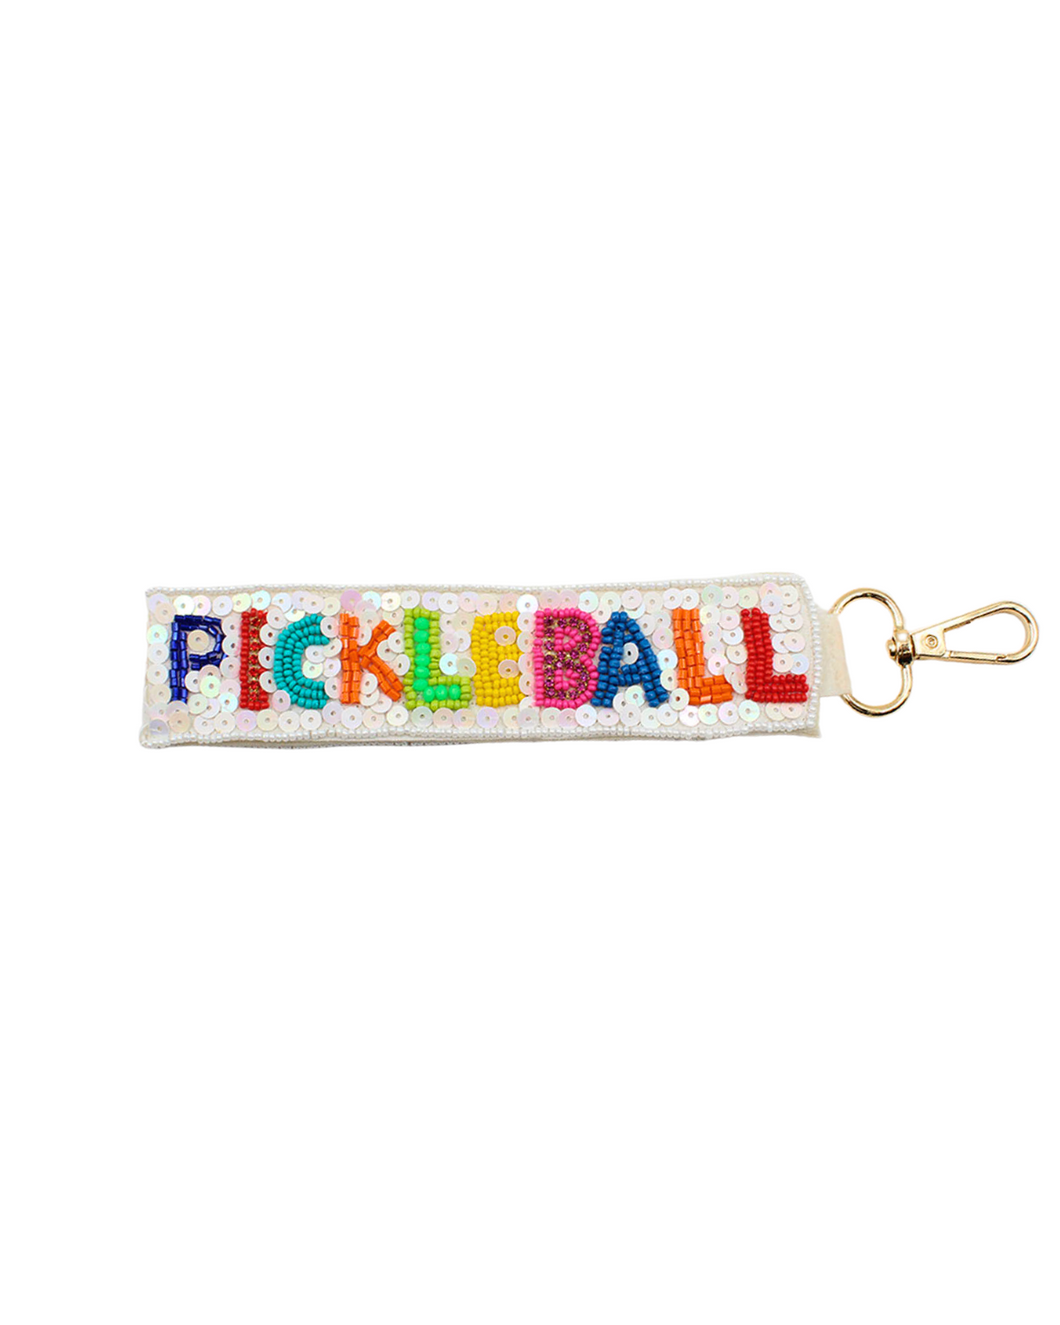 Pickleball Keychain Wristlet